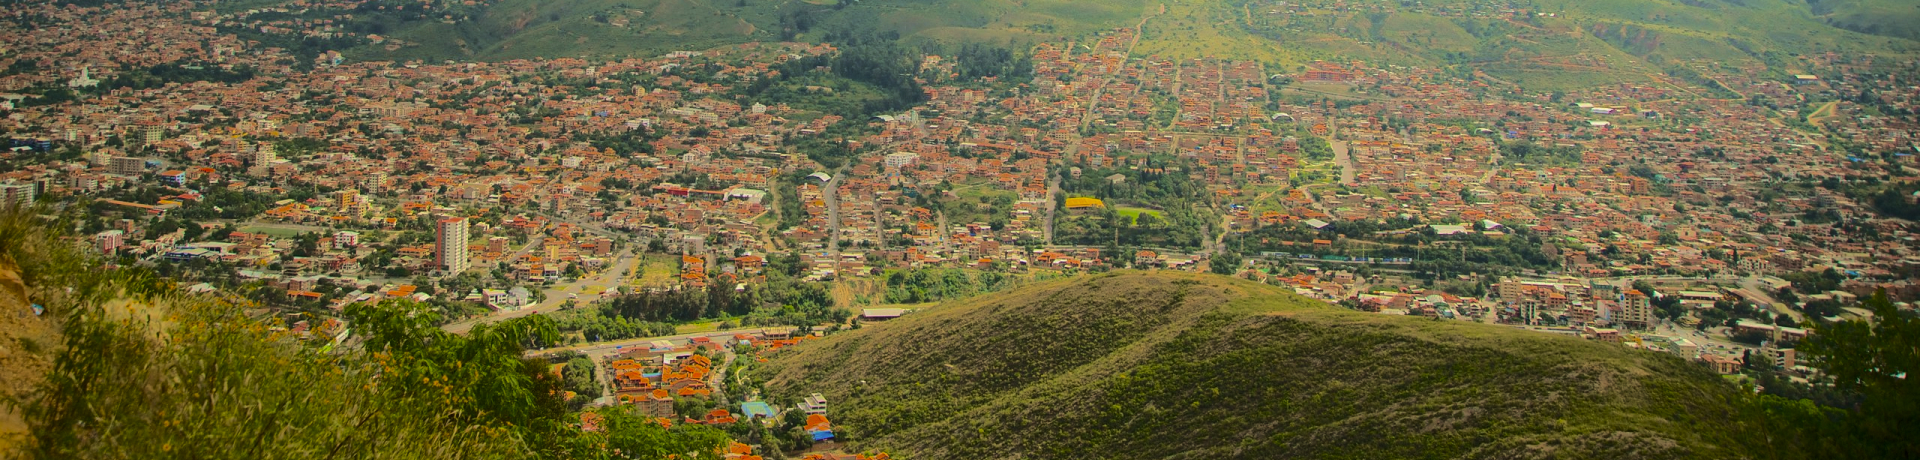 Santa Cruz Bolivia.